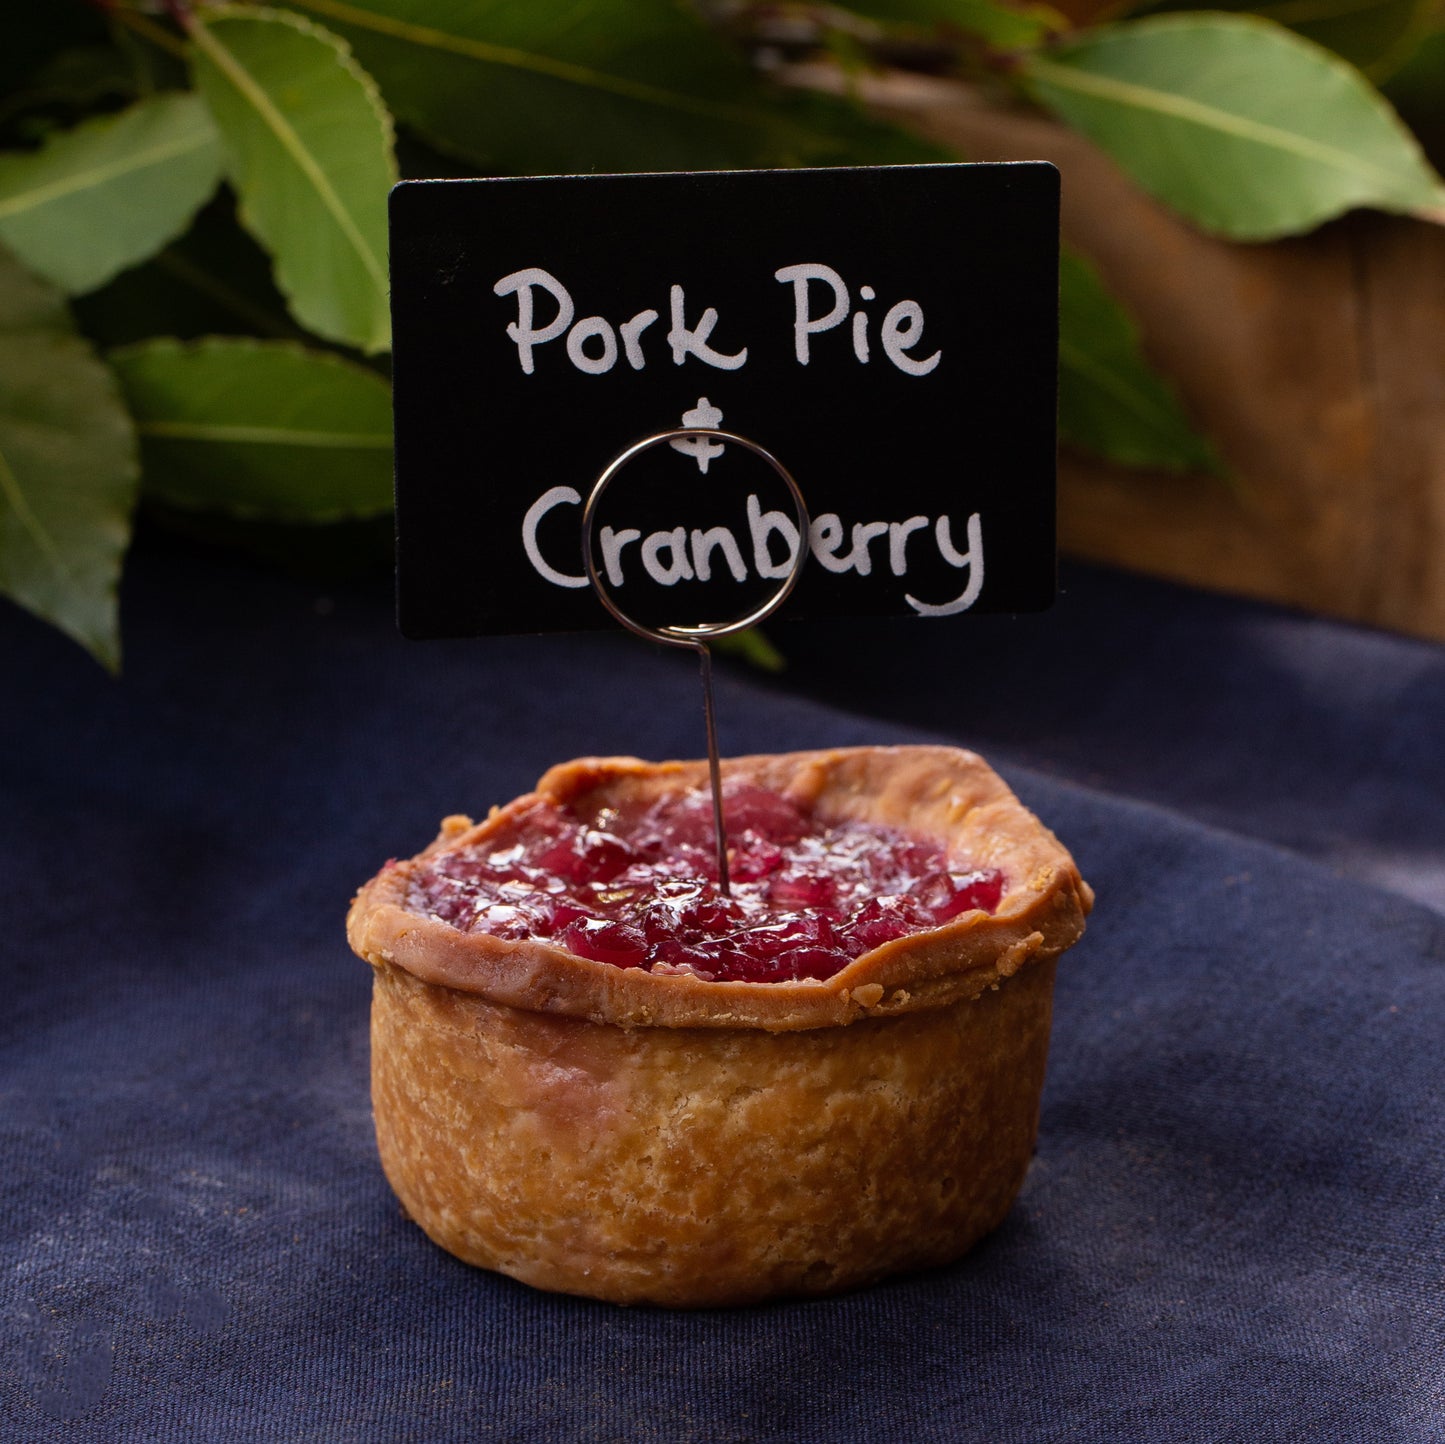 Picnic Pork Pie with Cranberry Top